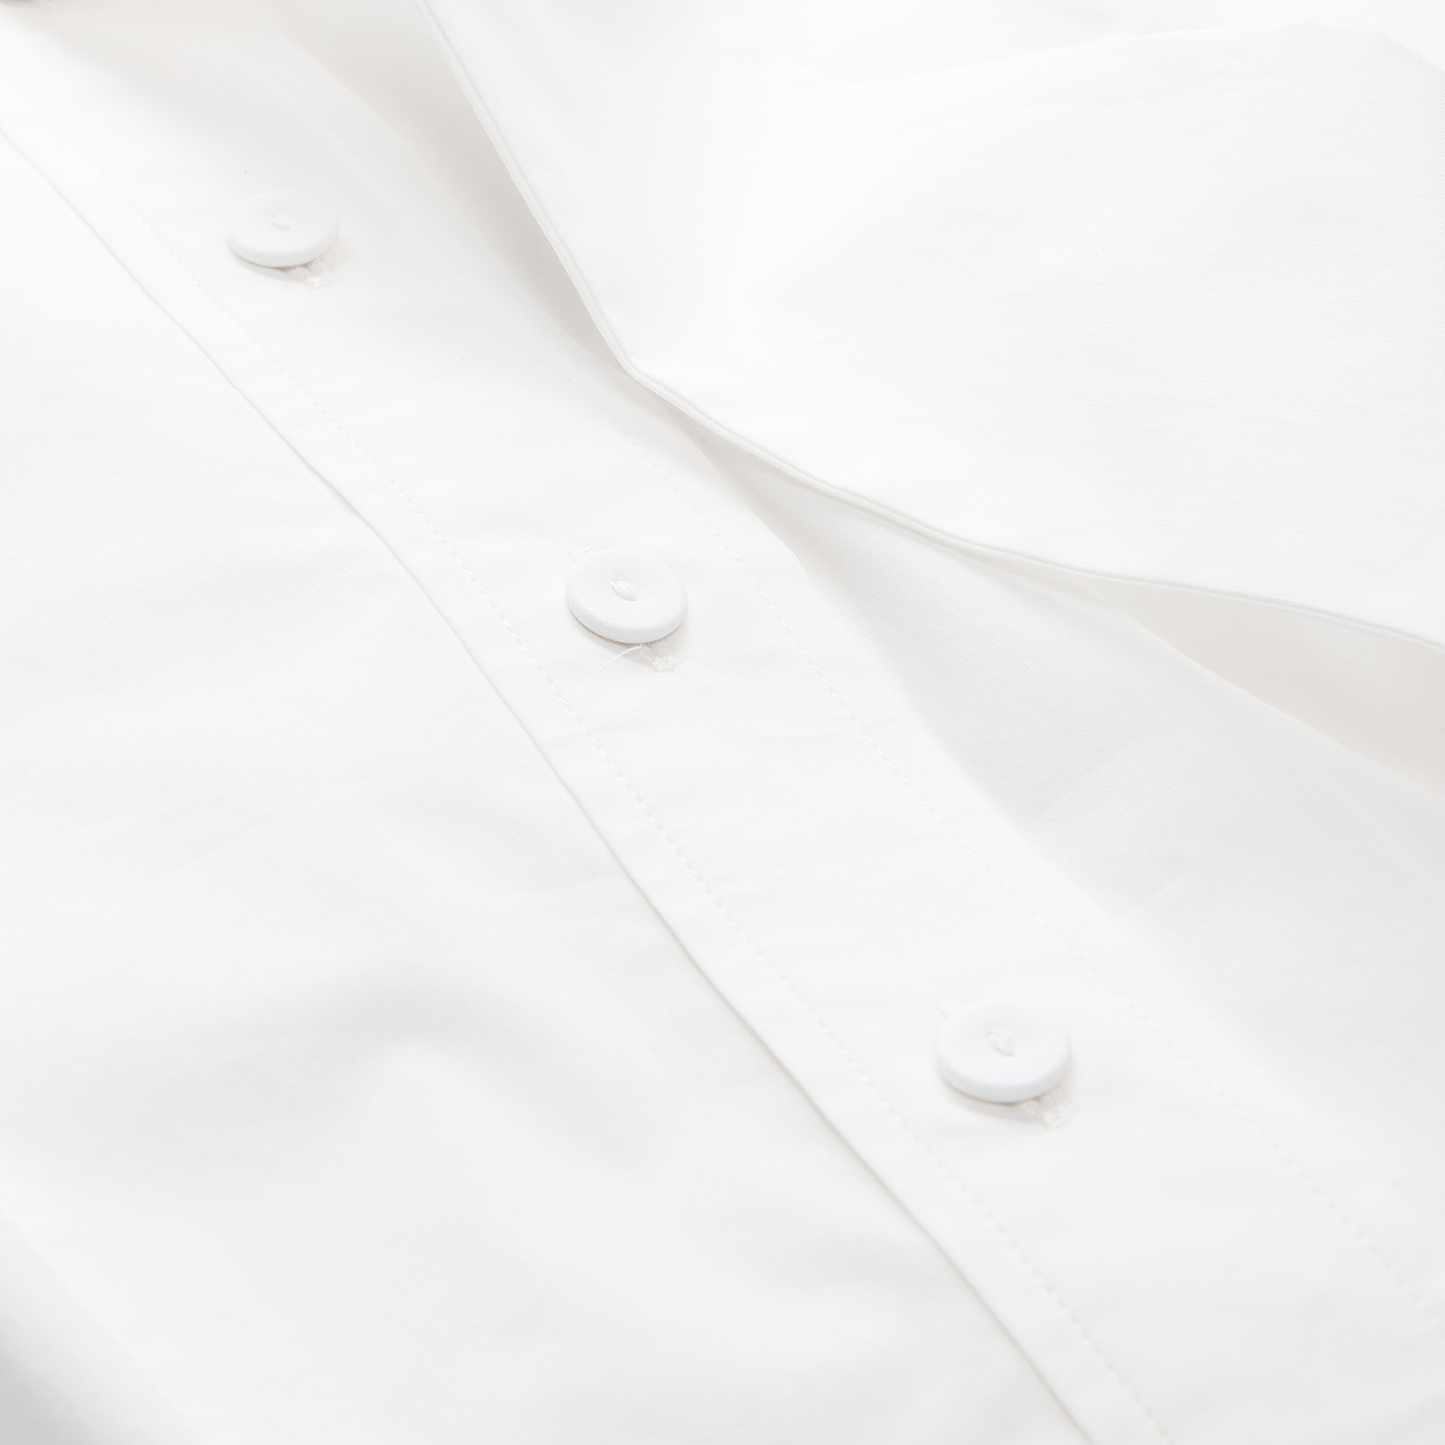 Moschino 60'S Silhouette Blouse (White)